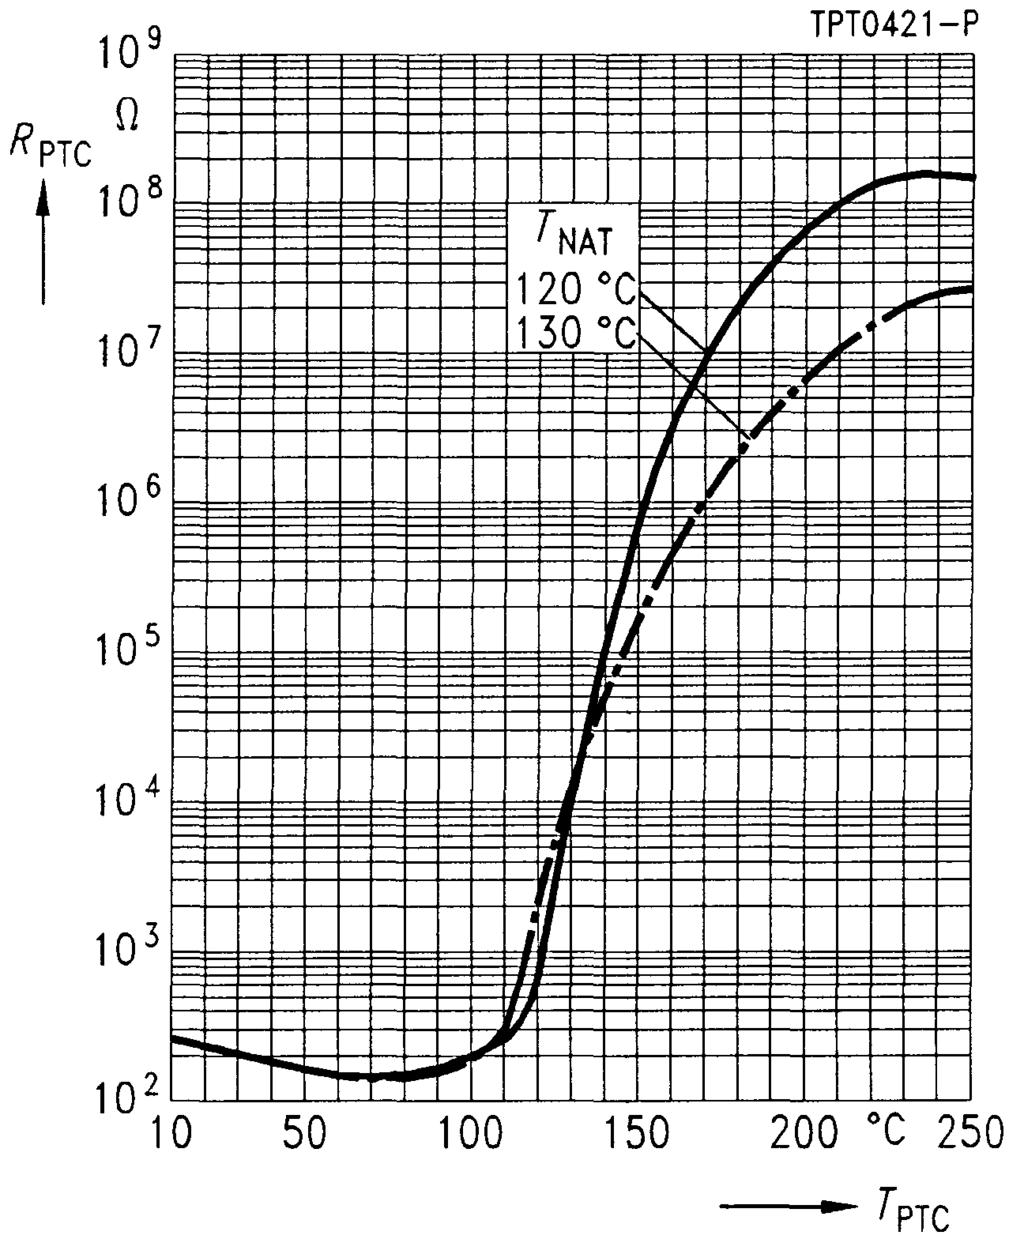 temperature T PTC (measured at low